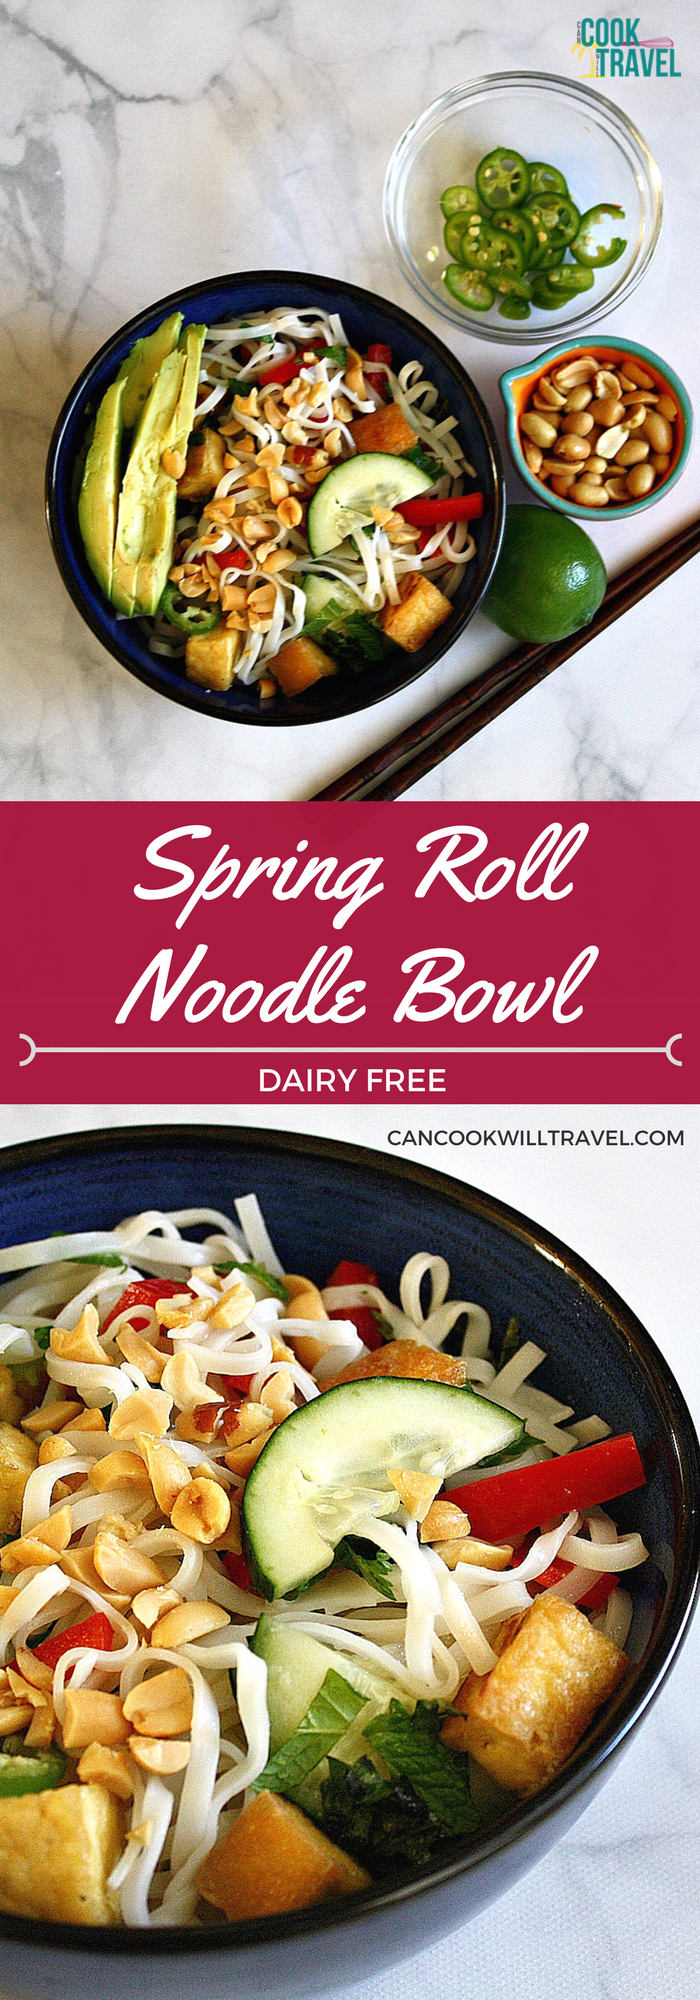 Spring Roll Noodle Bowl